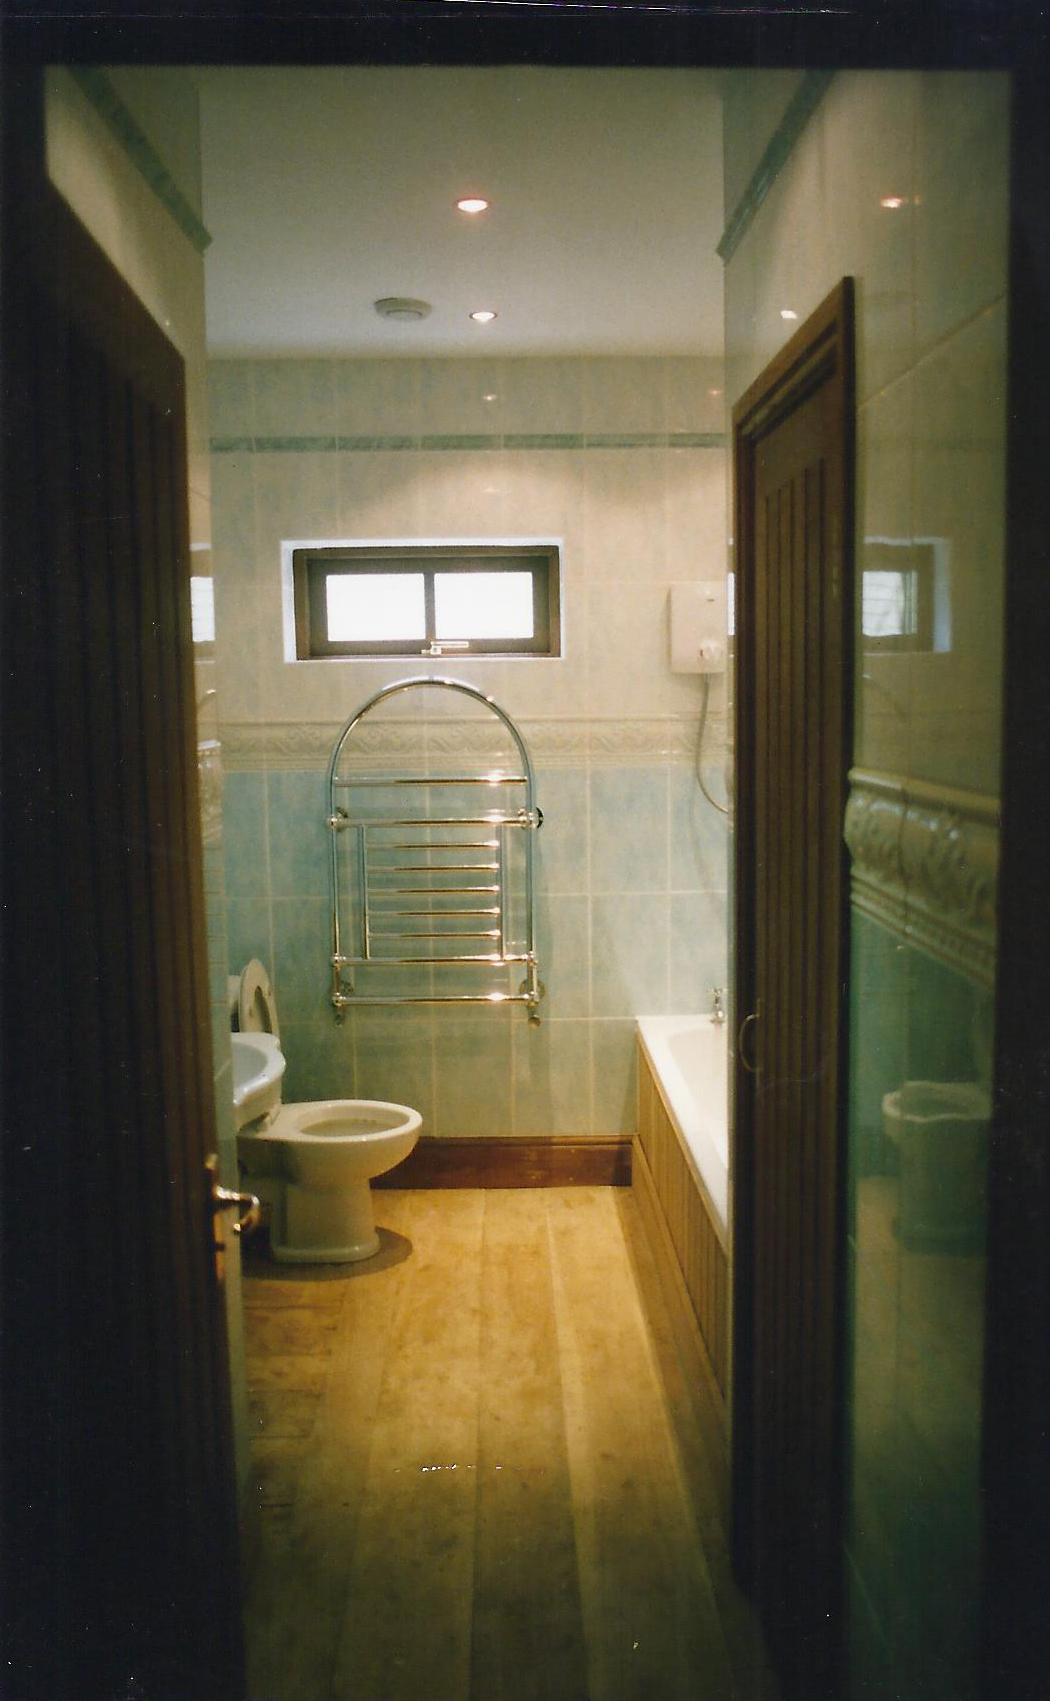 Bathroom Image 1 - North End Farm - East Yorkshire Architects - Samuel Kendall Associates